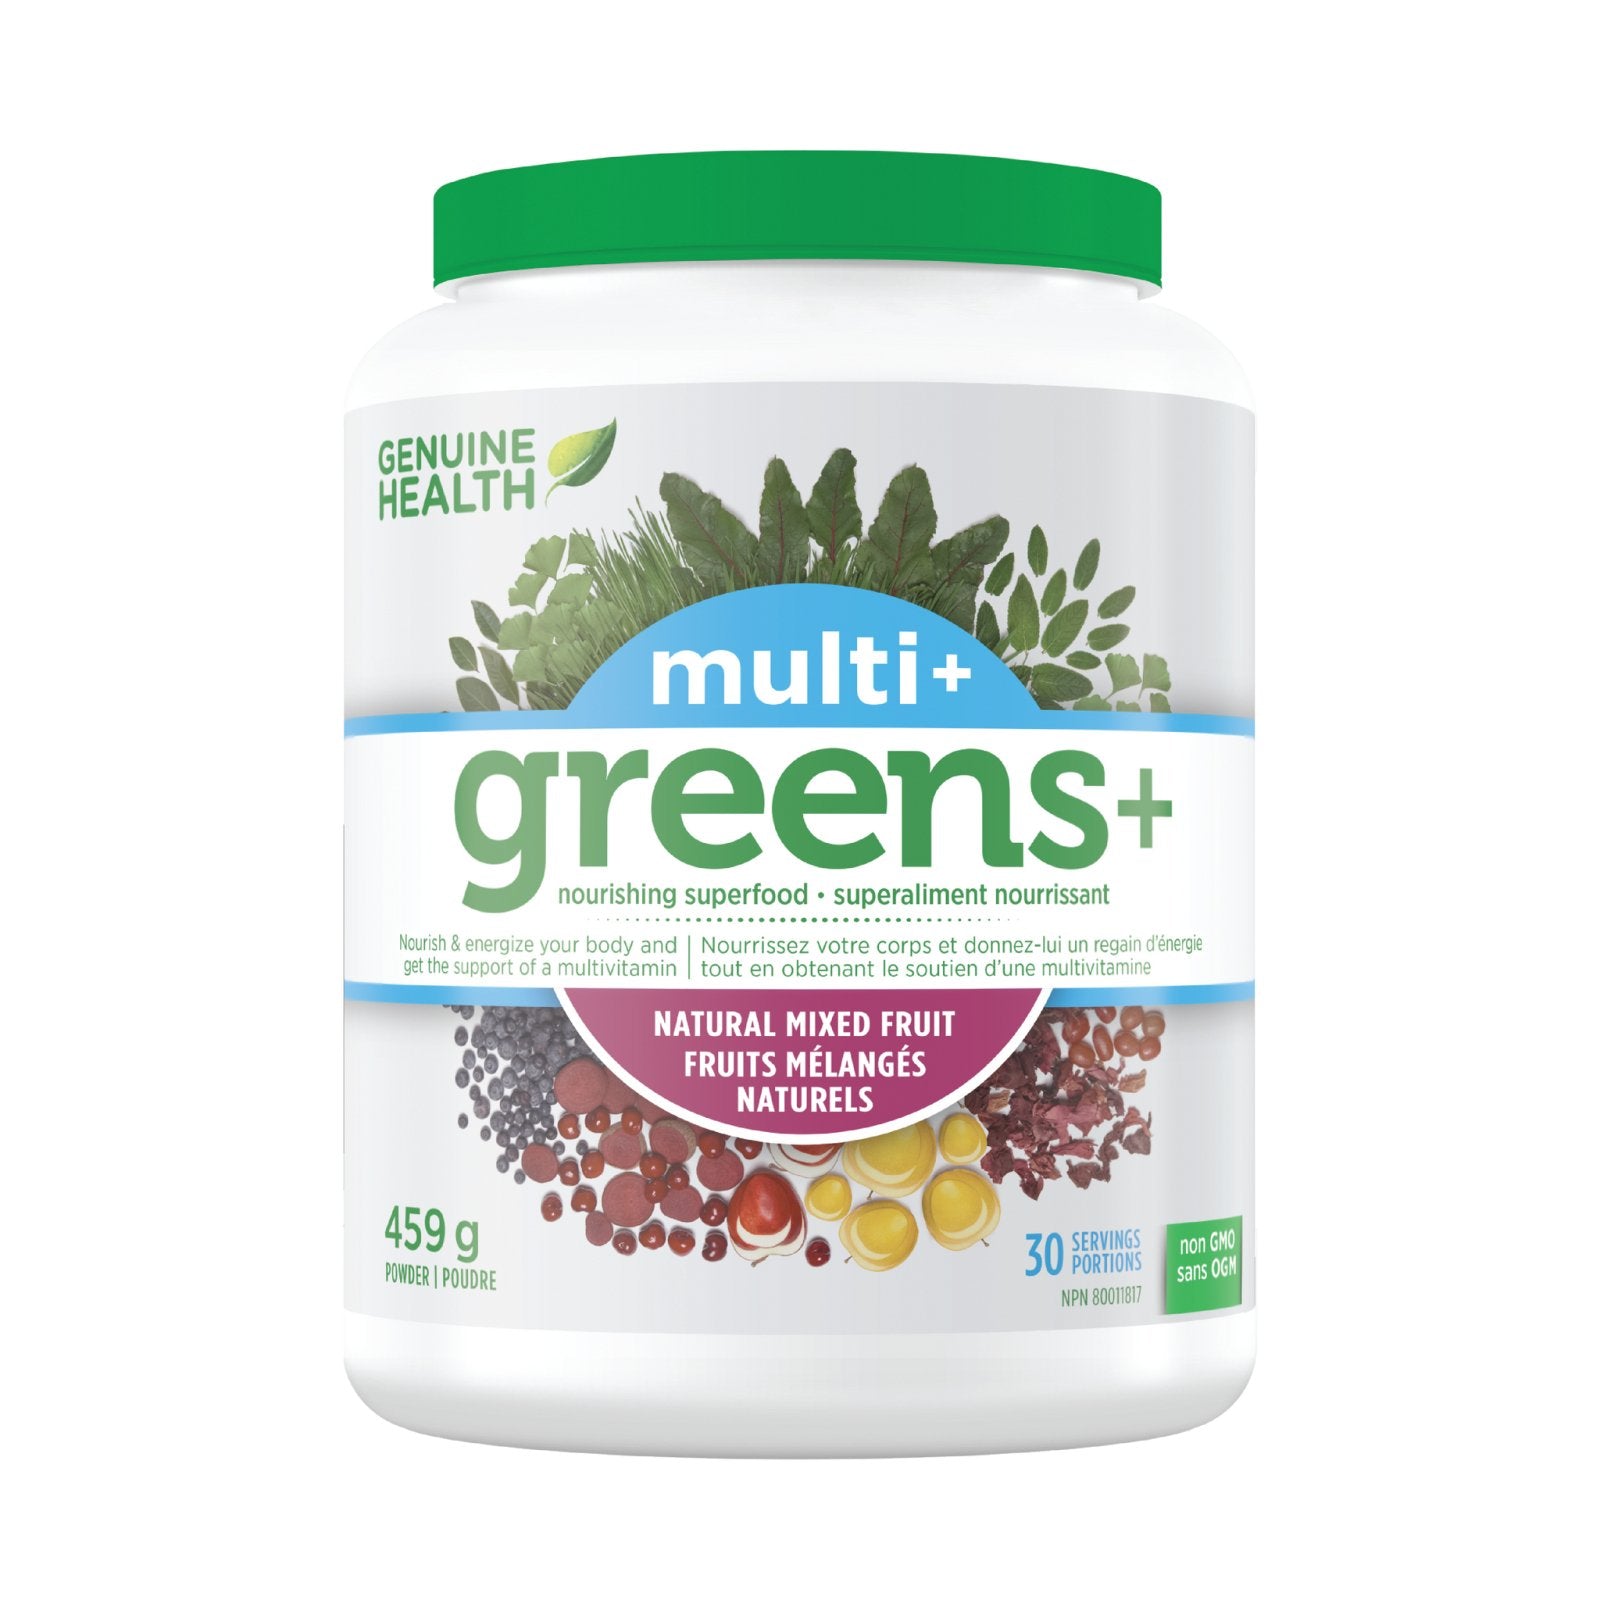 Genuine Health greens+ multi+ mixed fruit (459 g)